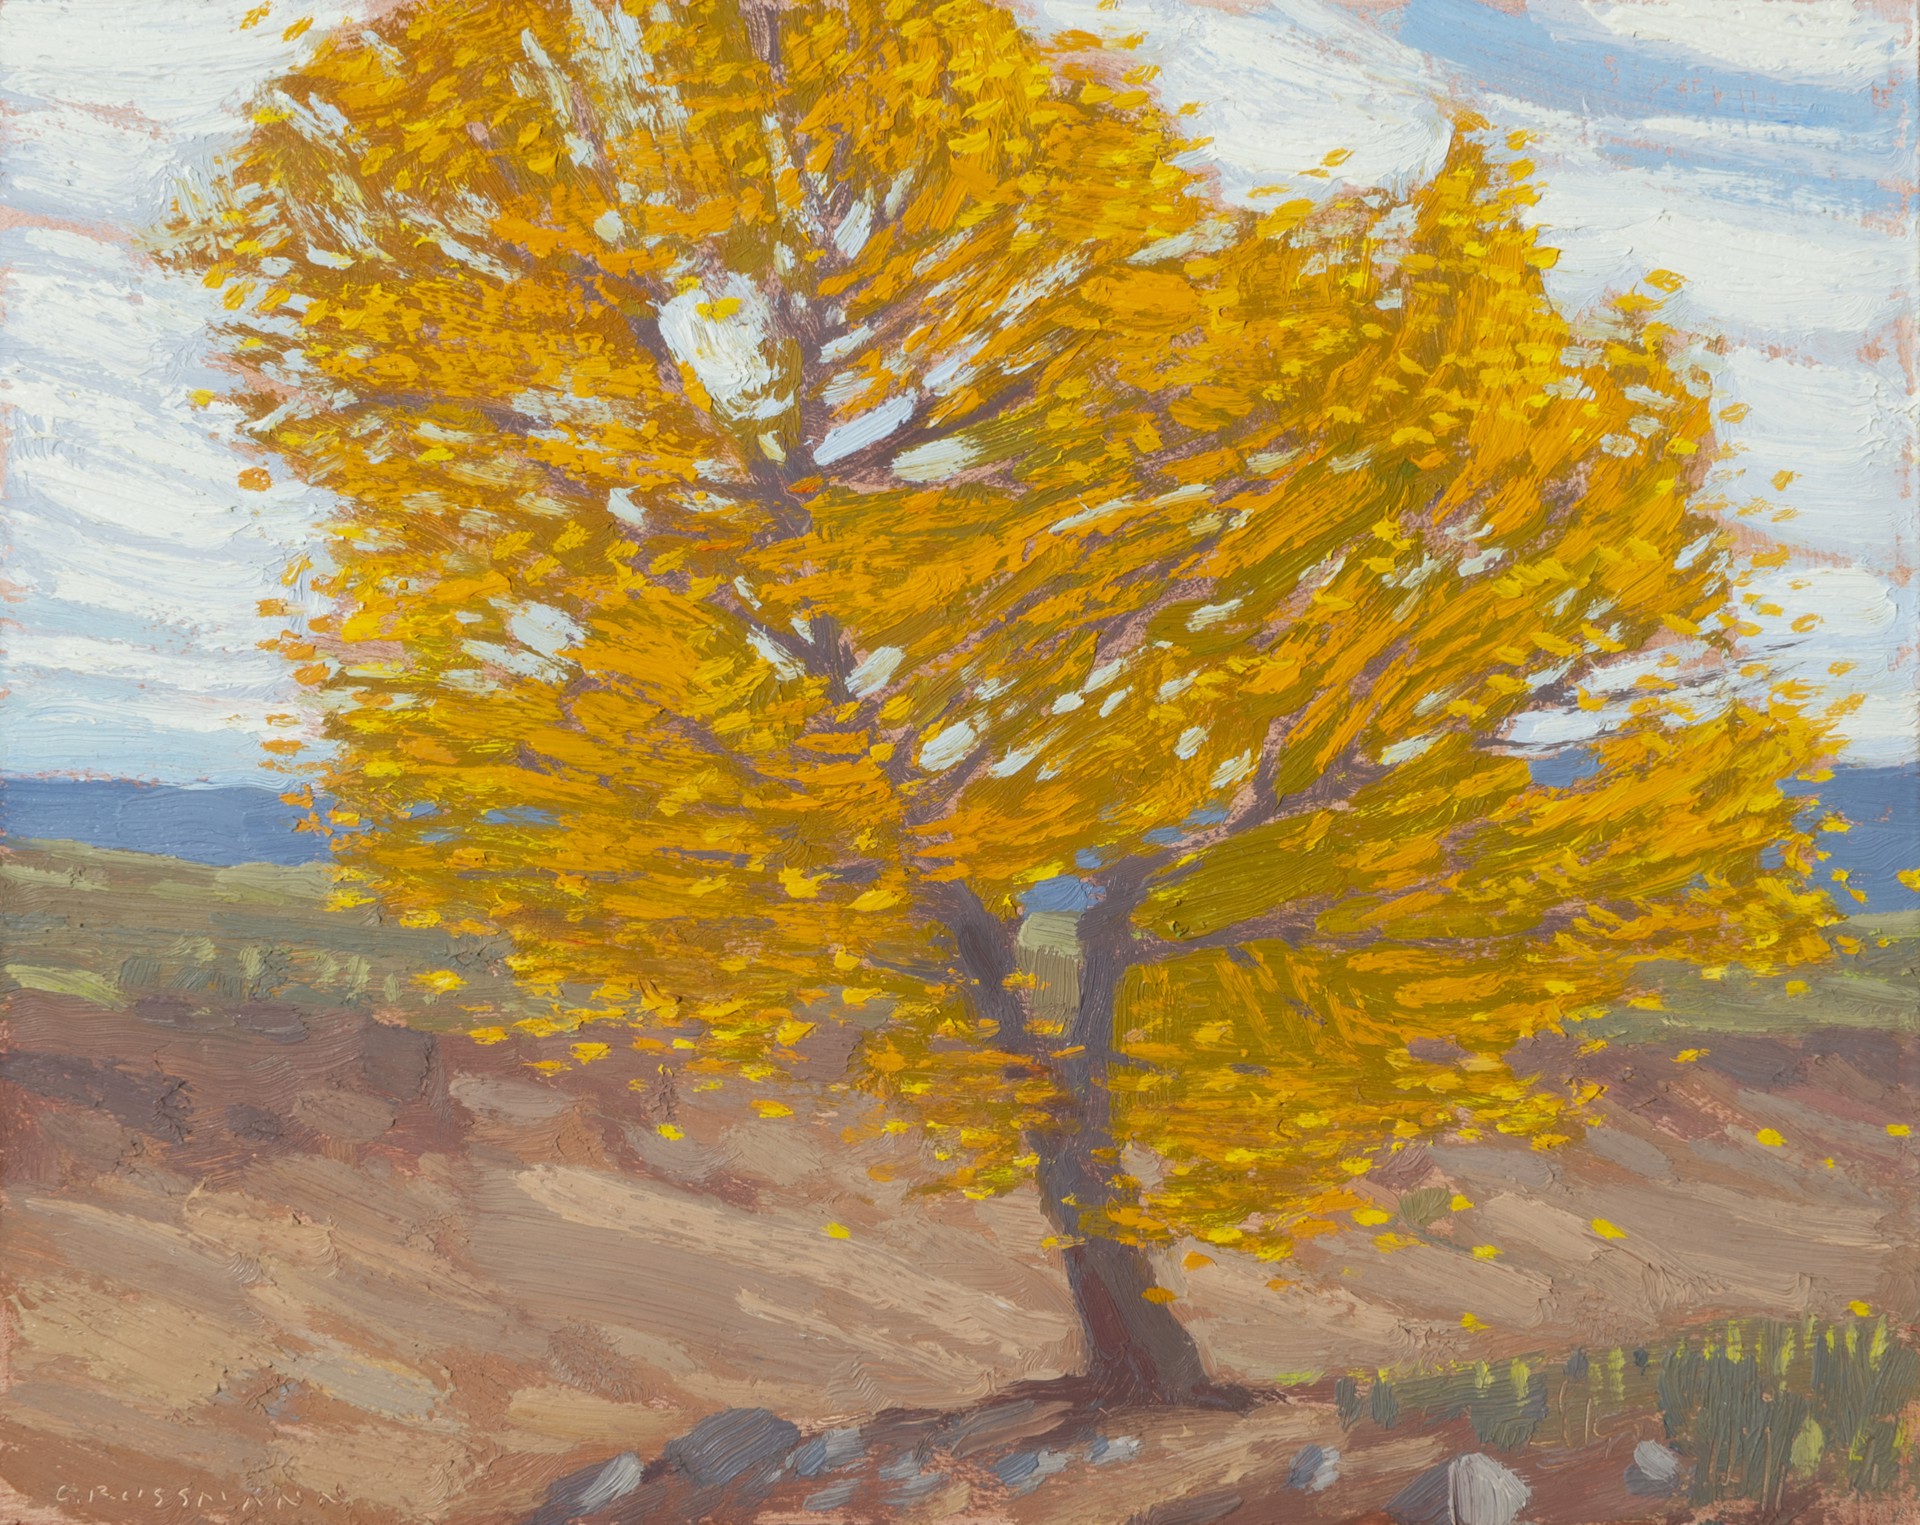 Autumn Cottonwood in the Arroyo by David Grossmann